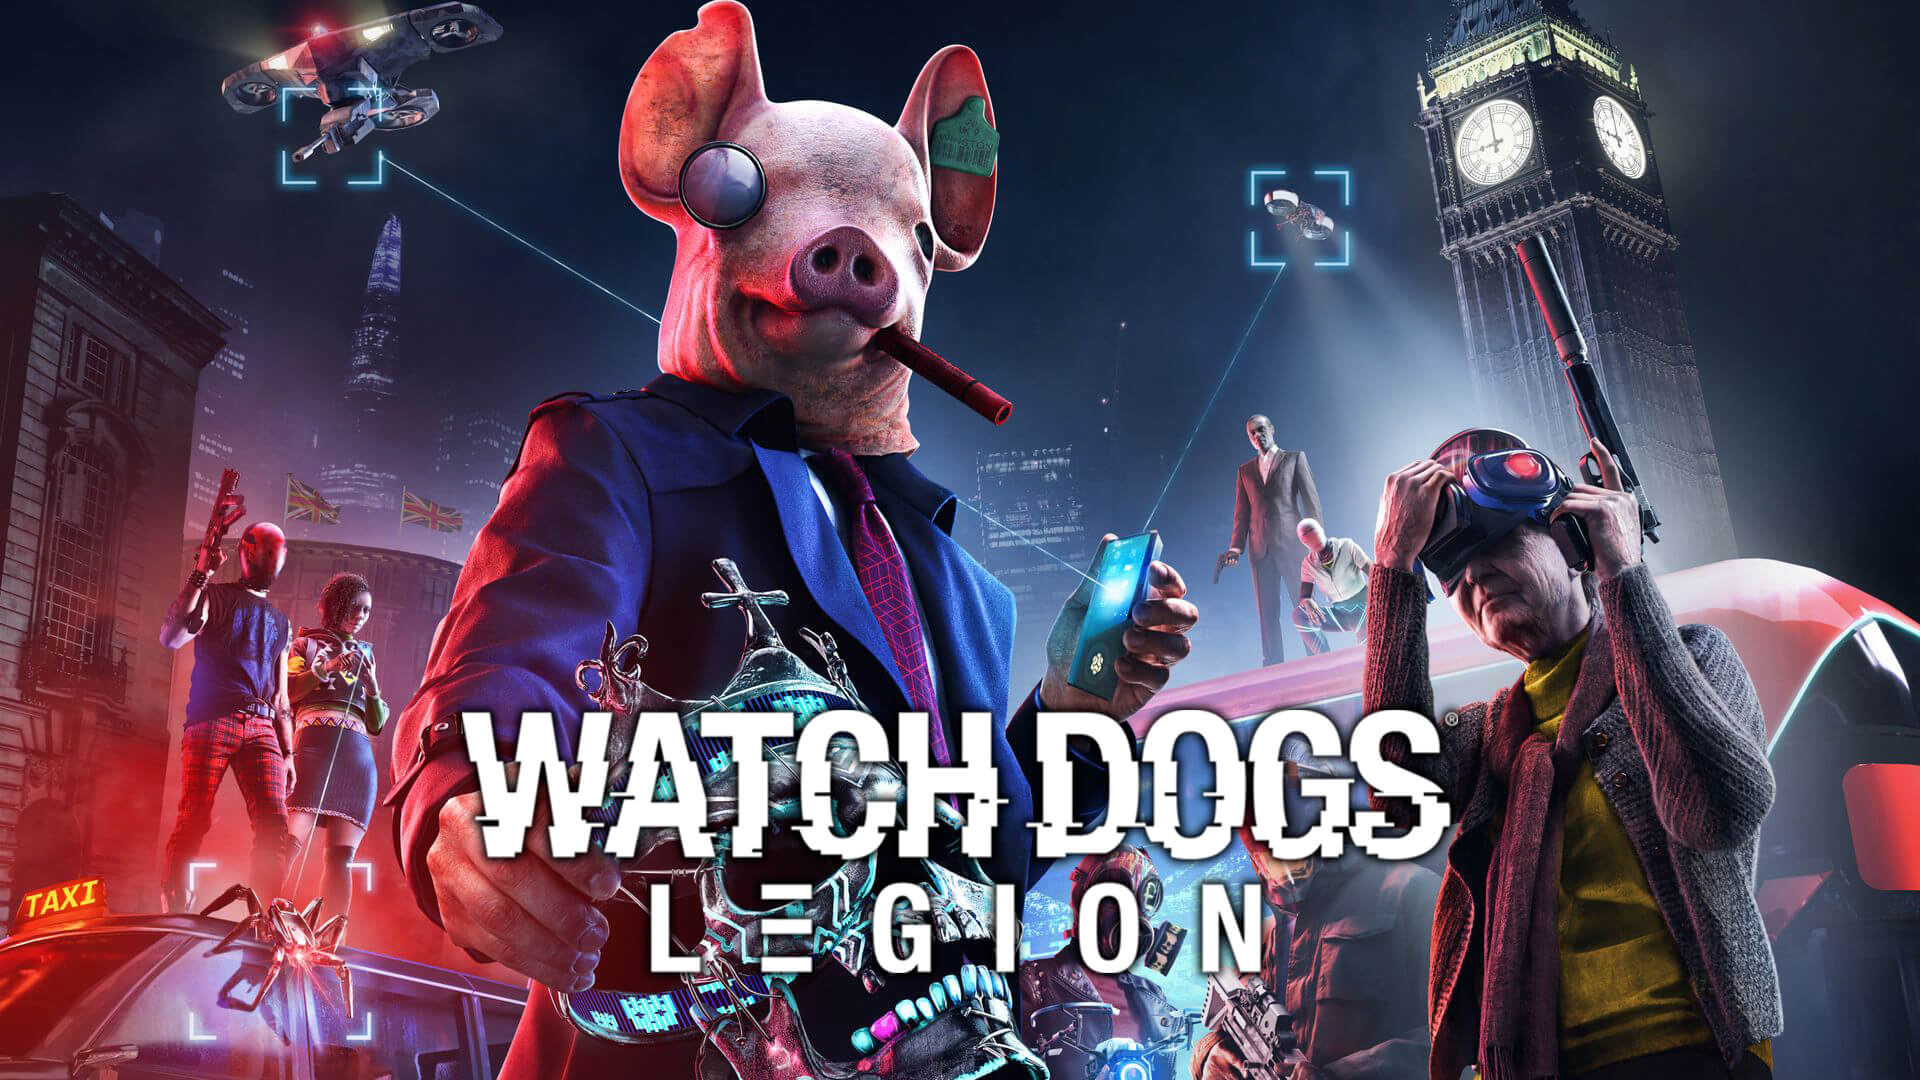 Veja requisitos para rodar Watch Dogs Legion no PC! RTX 2080 Ti